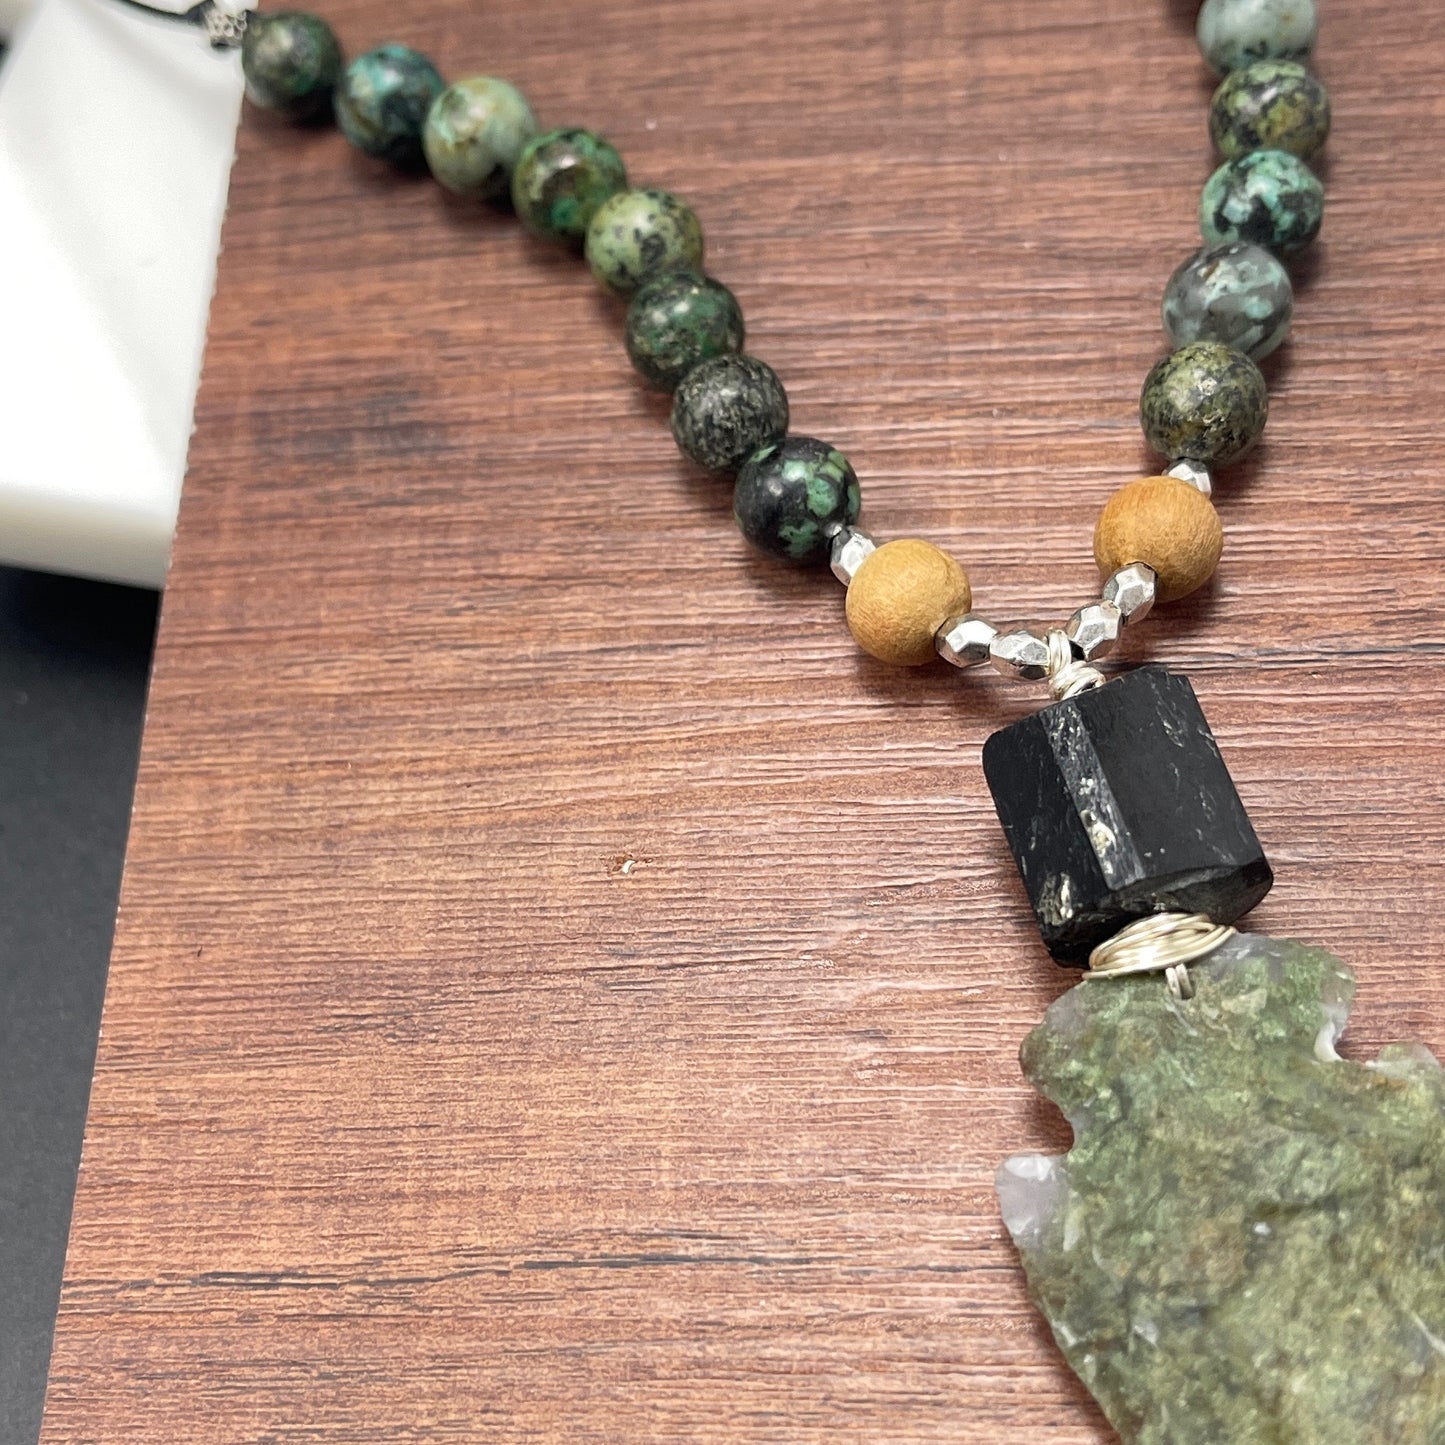 Turquoise Arrowhead adjustable length necklace